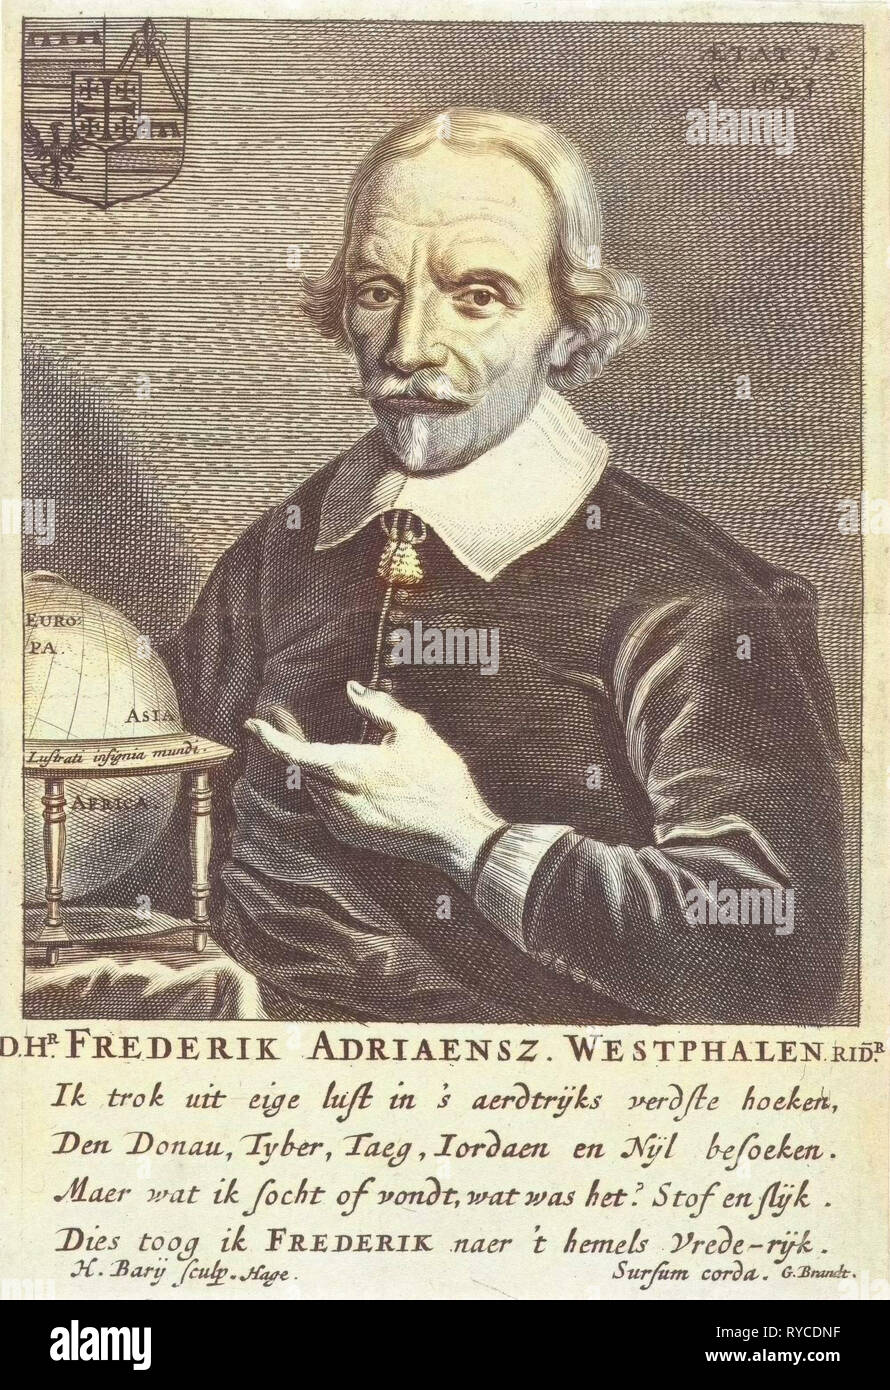 Portrait of Frederick Adriaensz Westphalen at the age of 72, Hendrik Bary, Geeraert Brandt (I), 1657 - 1707 Stock Photo